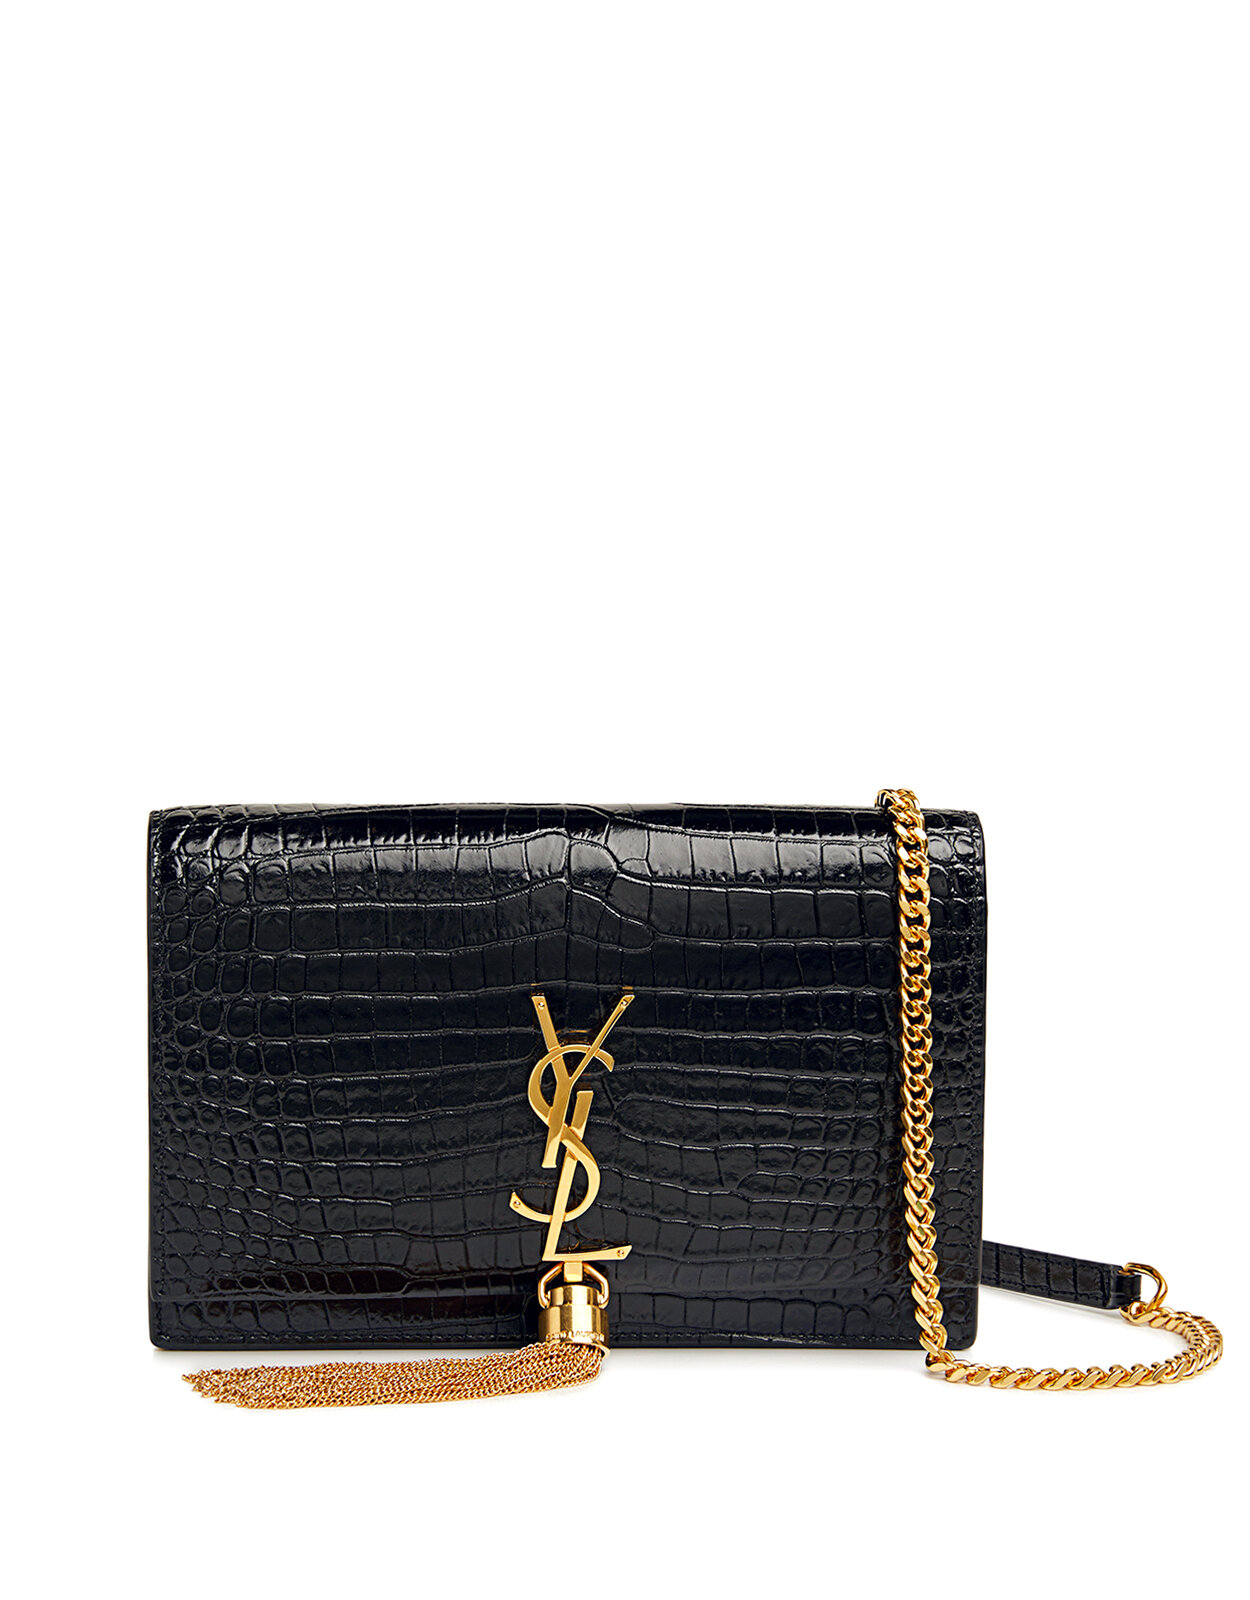 Saint Laurent Small Kate Tassel Bag in Black Crocodile-Embossed Leather with Gold Hardware.jpg